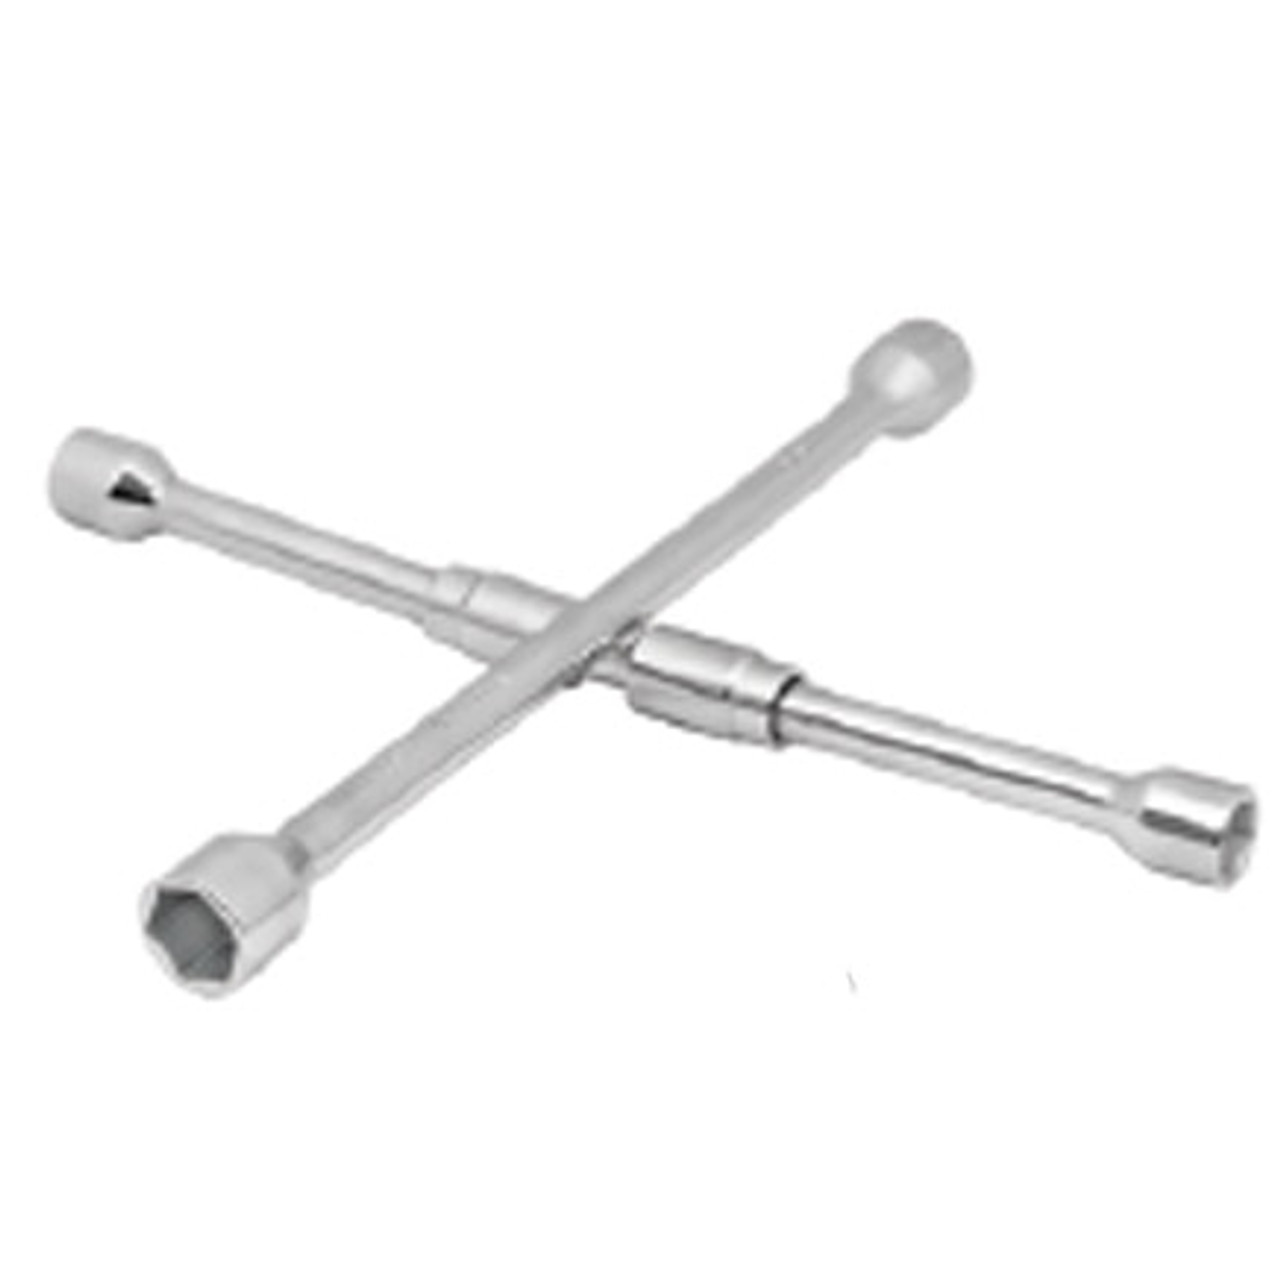 Truper Folding Lug Wrenches, 14" 4 Way Lug Wrench #15484